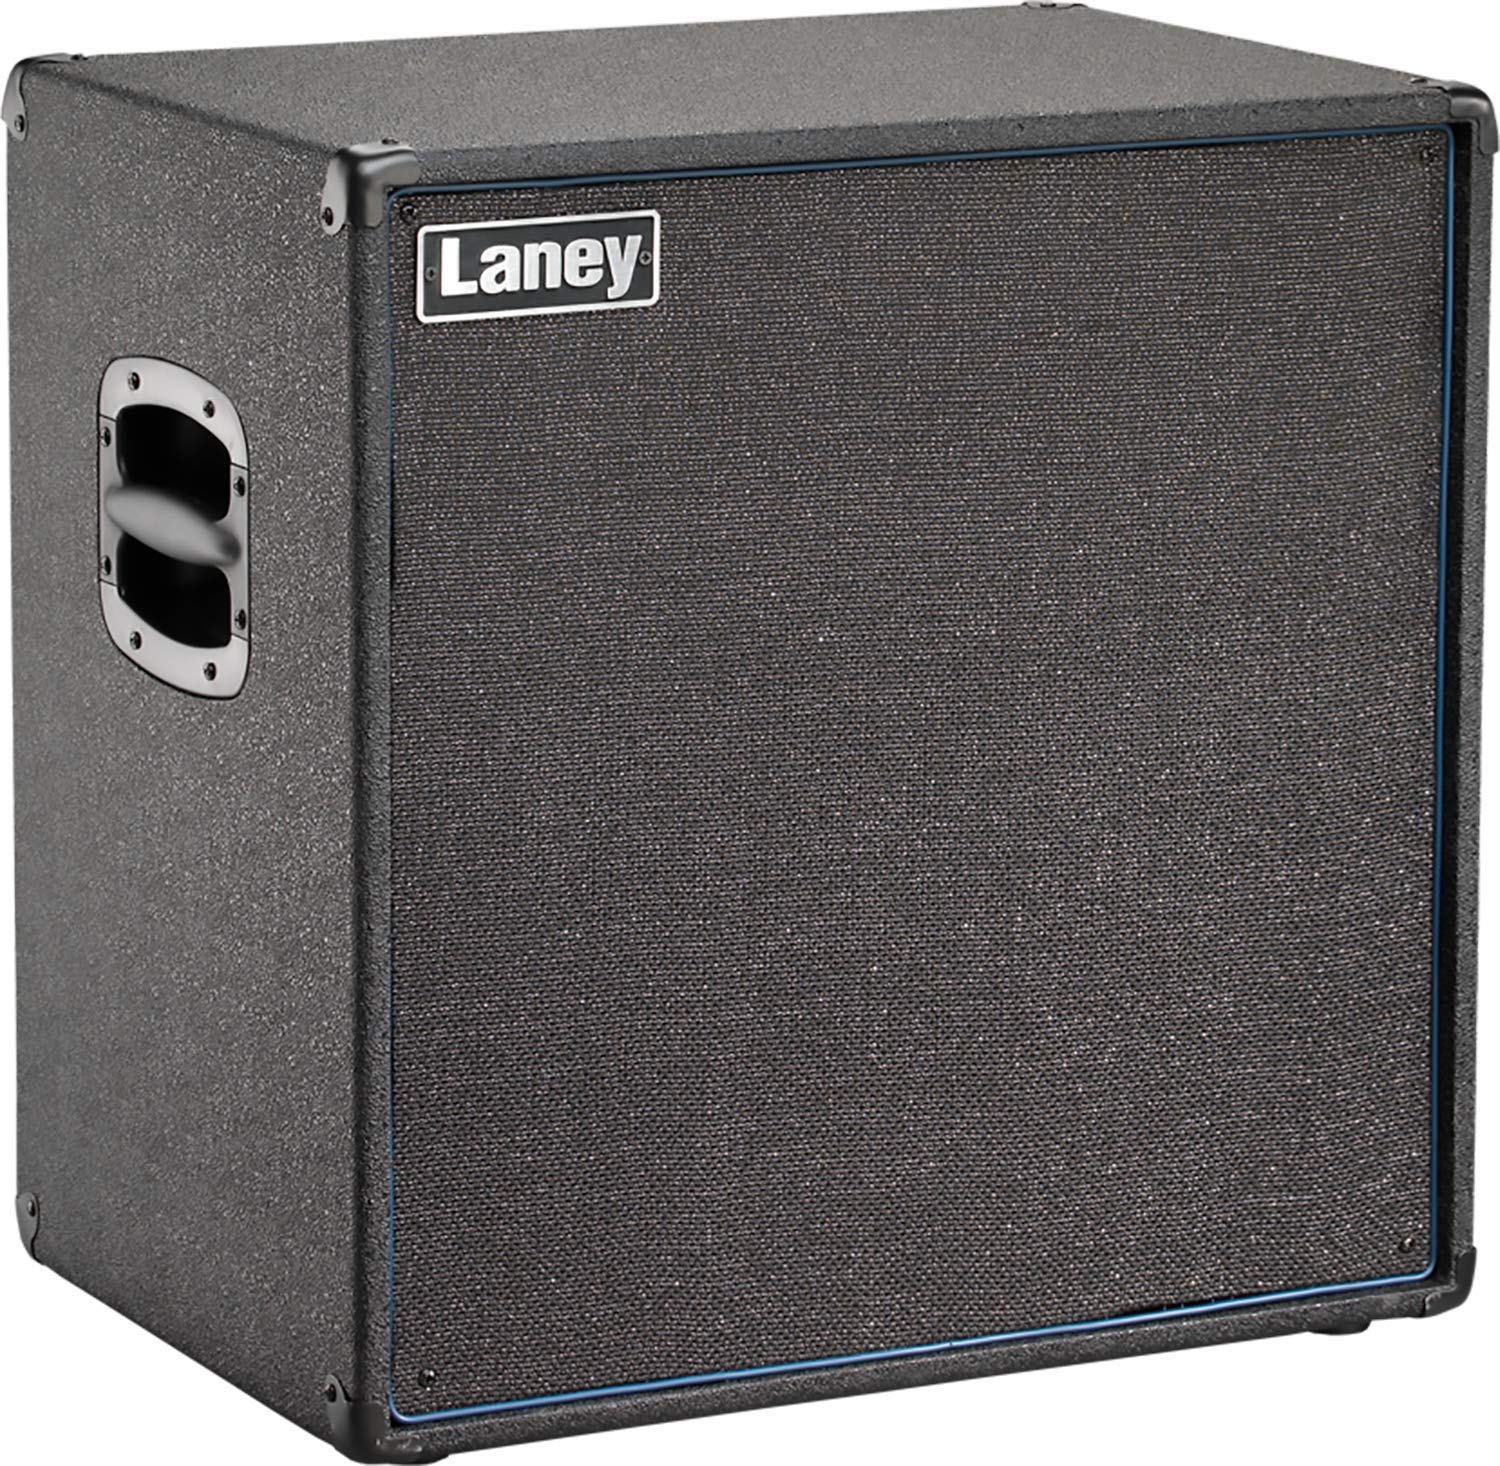 Laney RICHTER Series R410 - Bass Guitar Enclosure - 800W 8 ohm - 4 x 10 inch Woofers Plus Horn